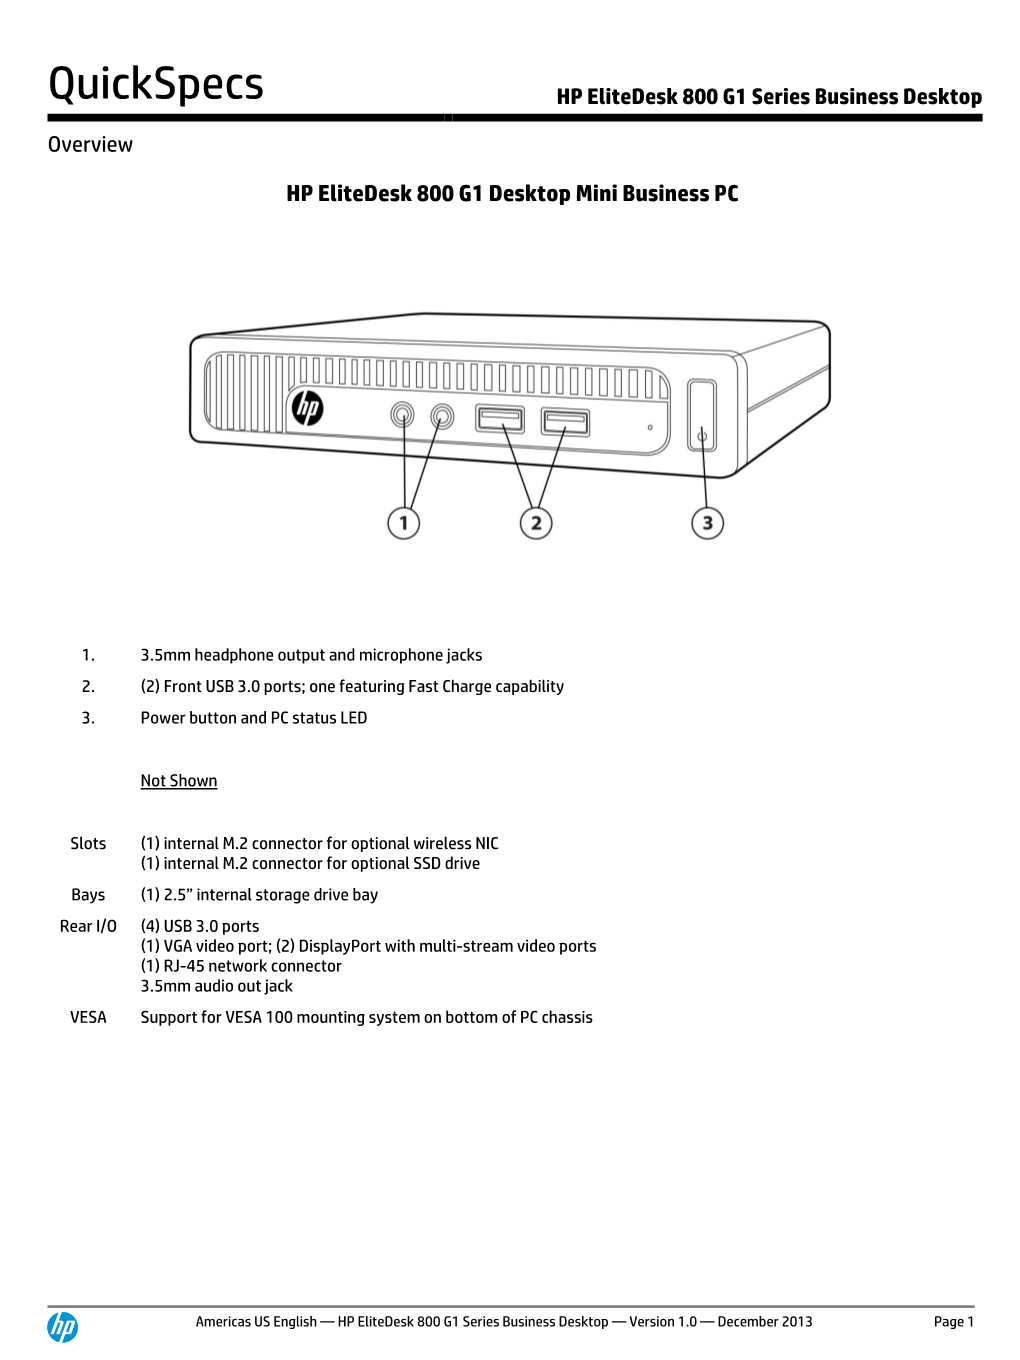 HP Elitedesk 800 G1 Business Series Desktop